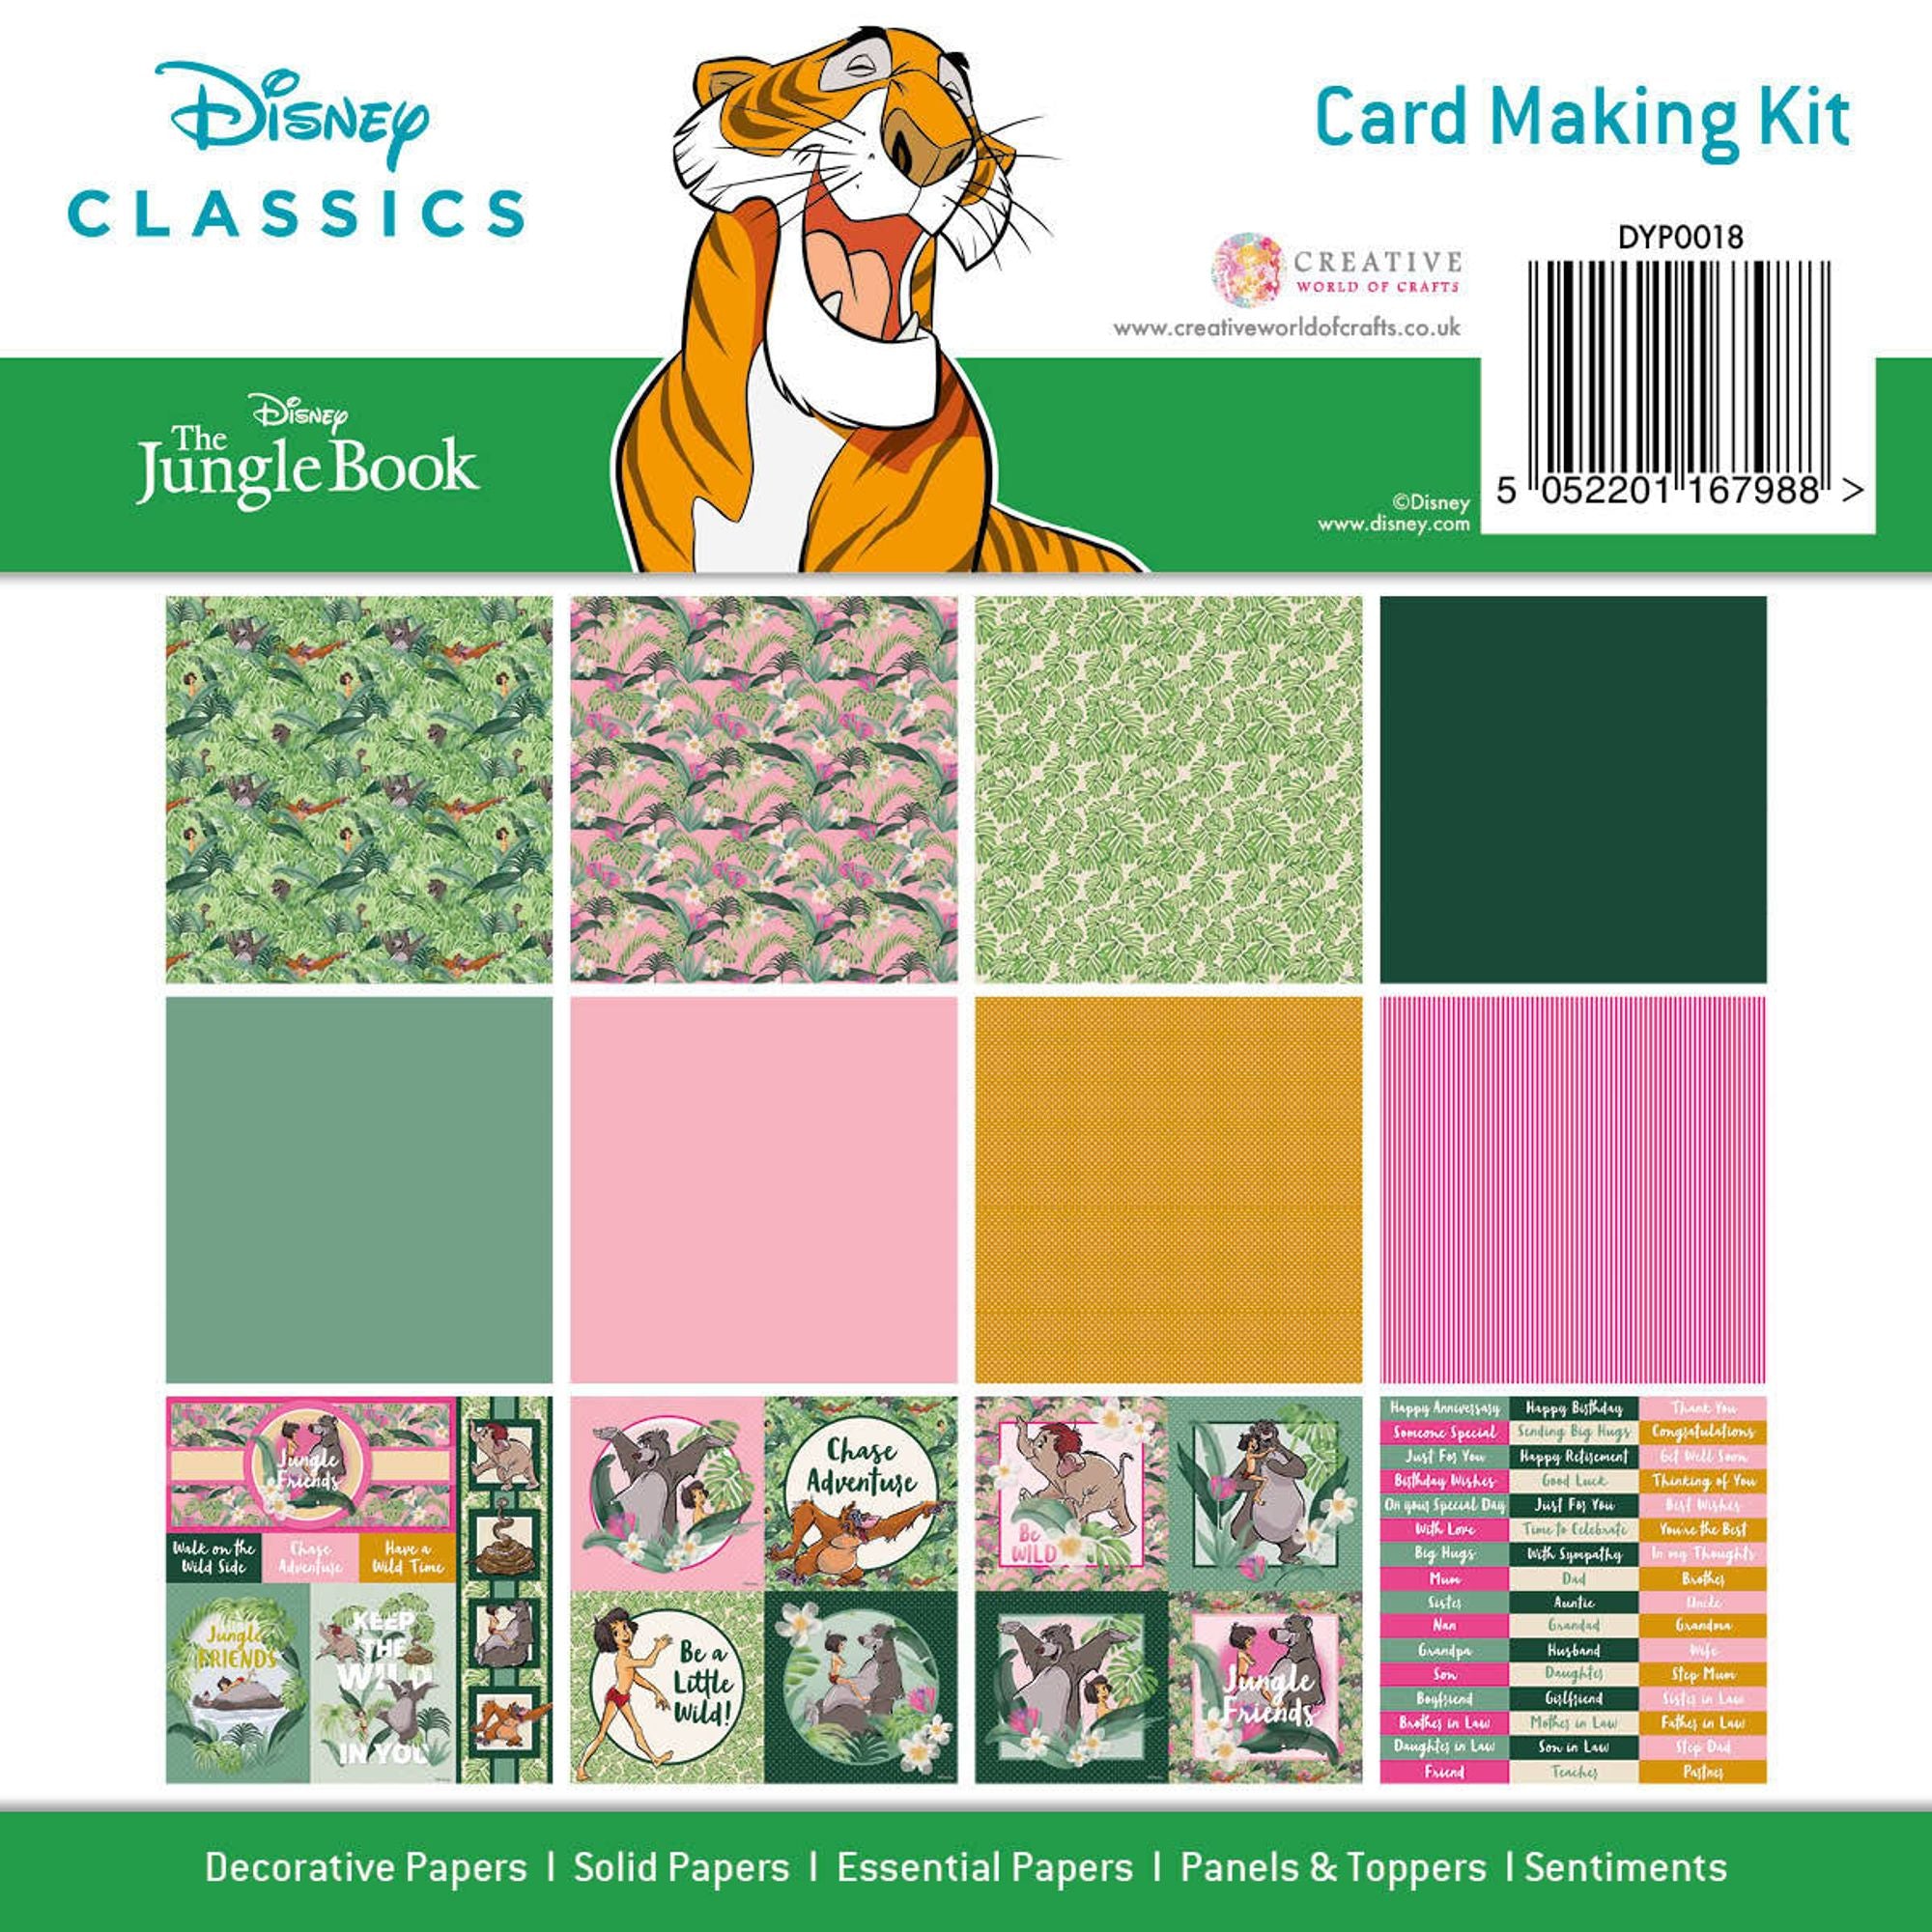 The Jungle Book - Card Making Pad